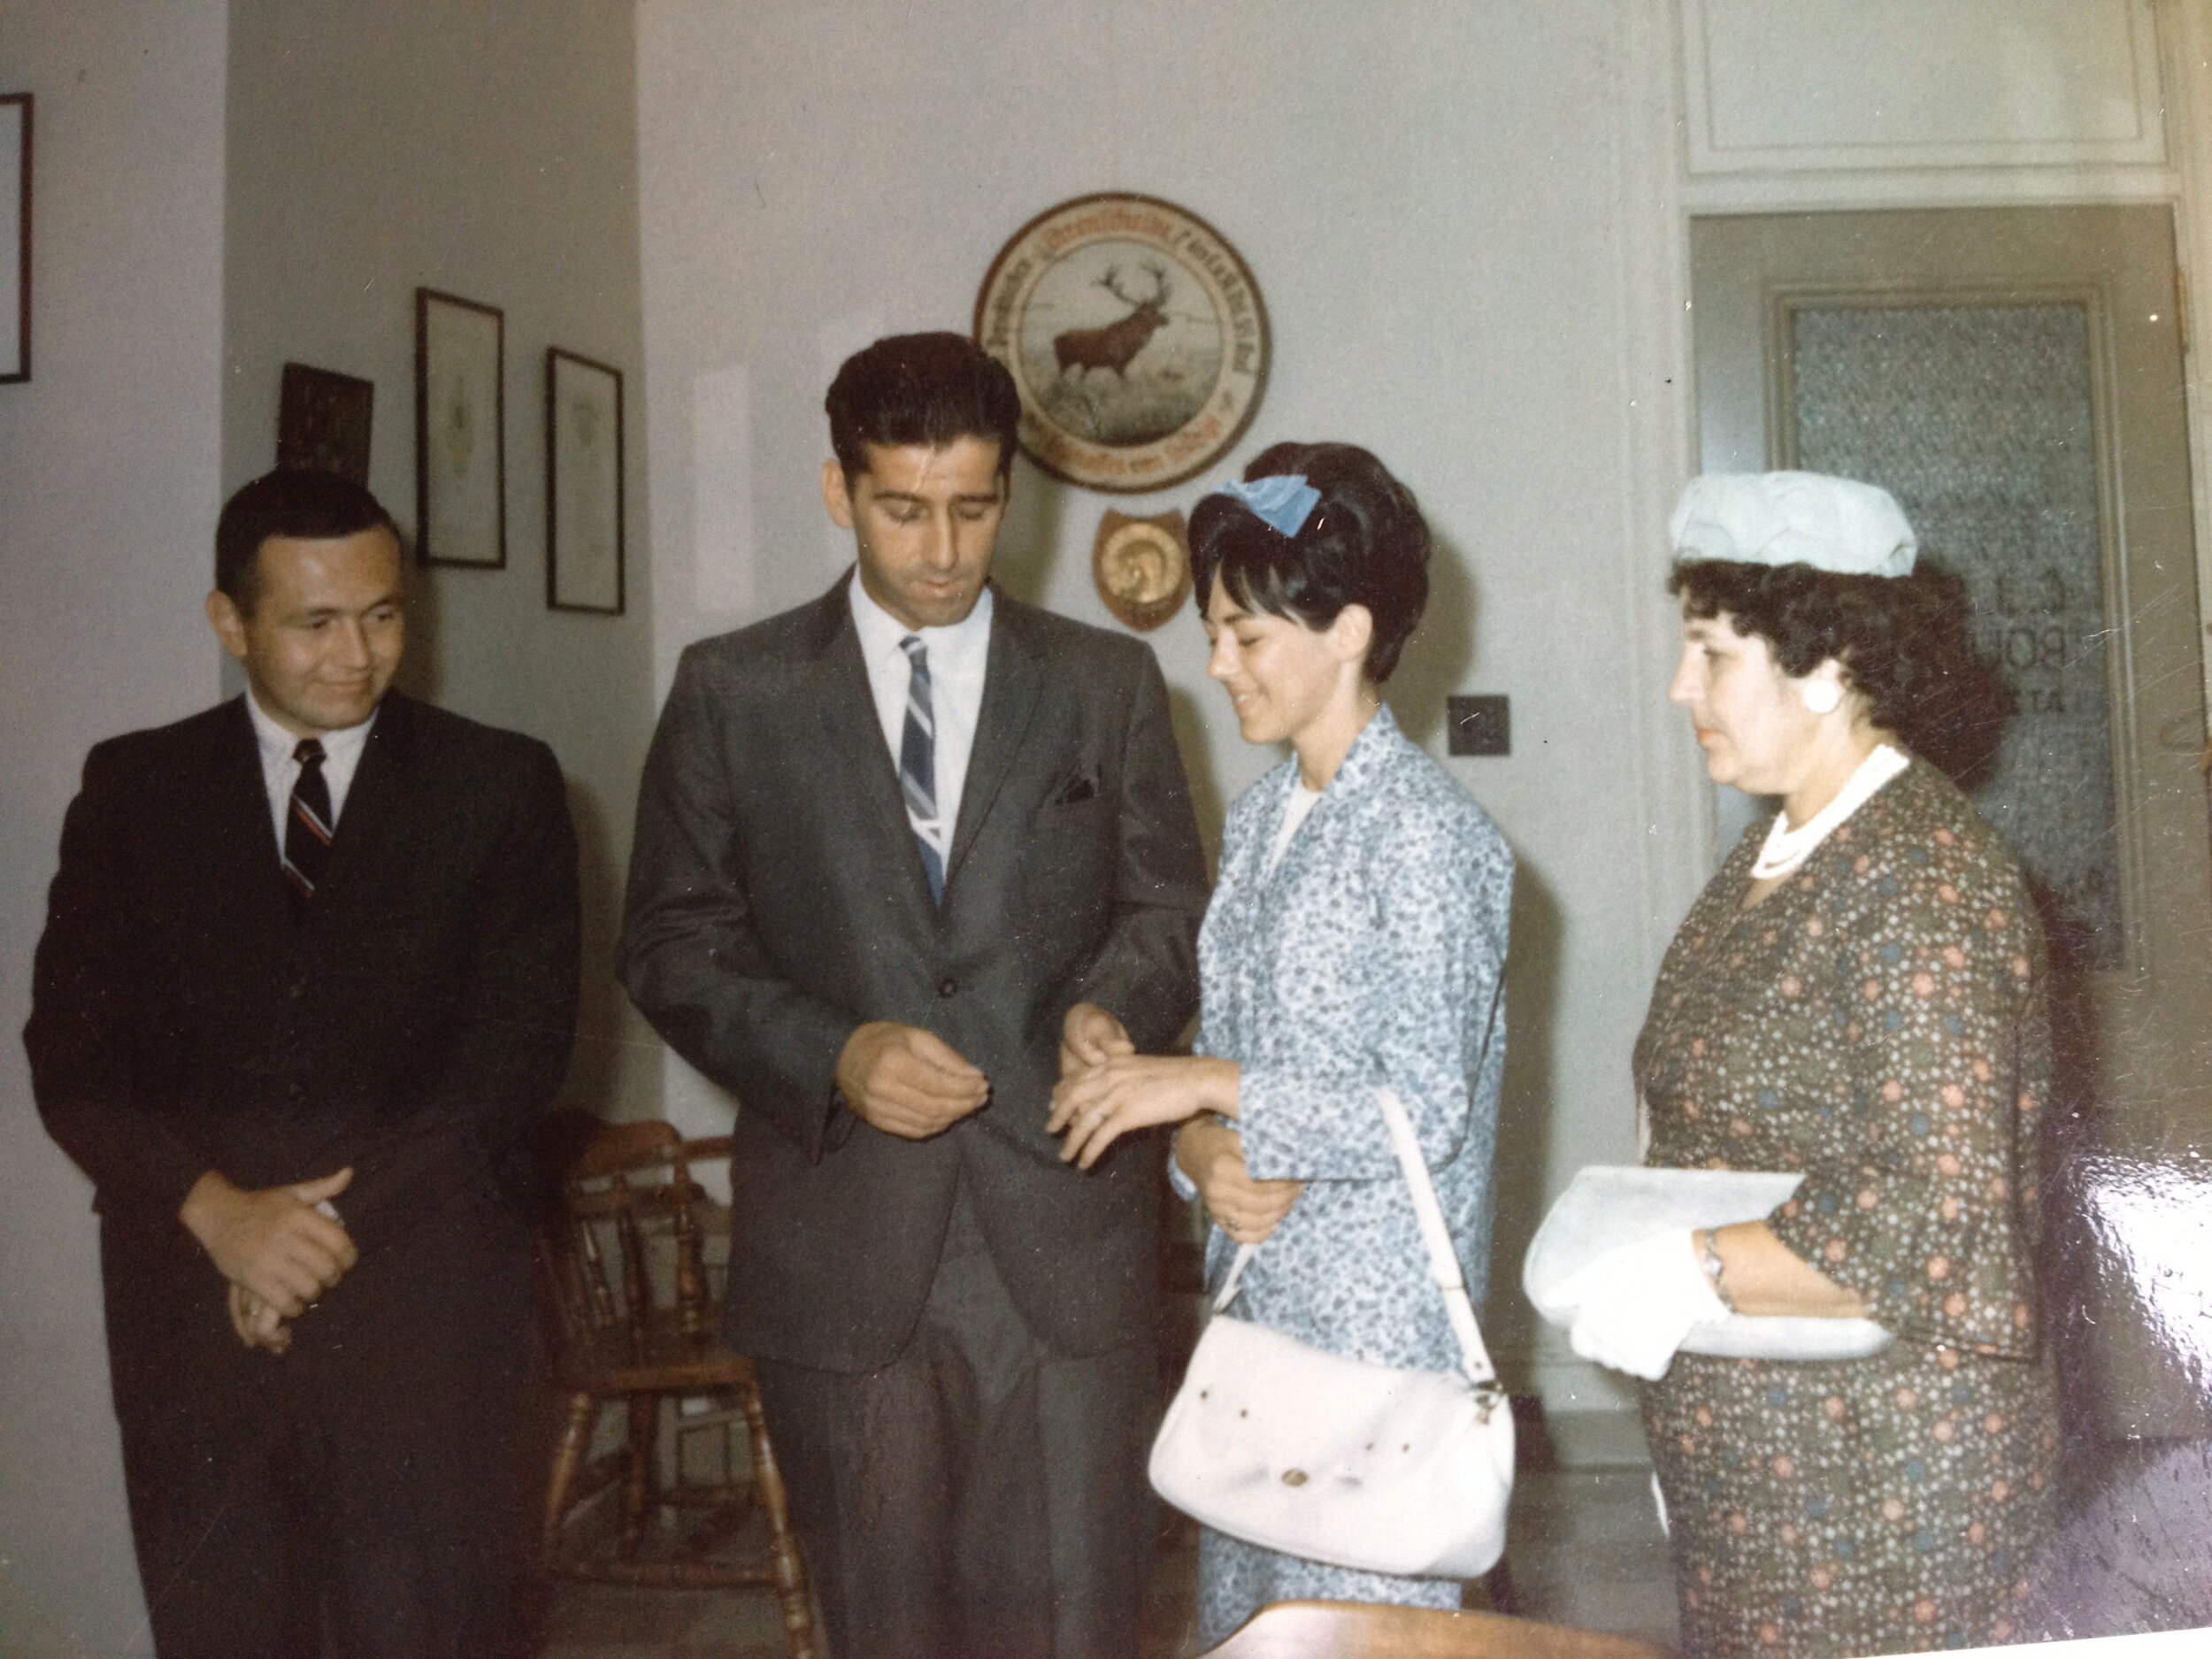 My parents' wedding, 1966